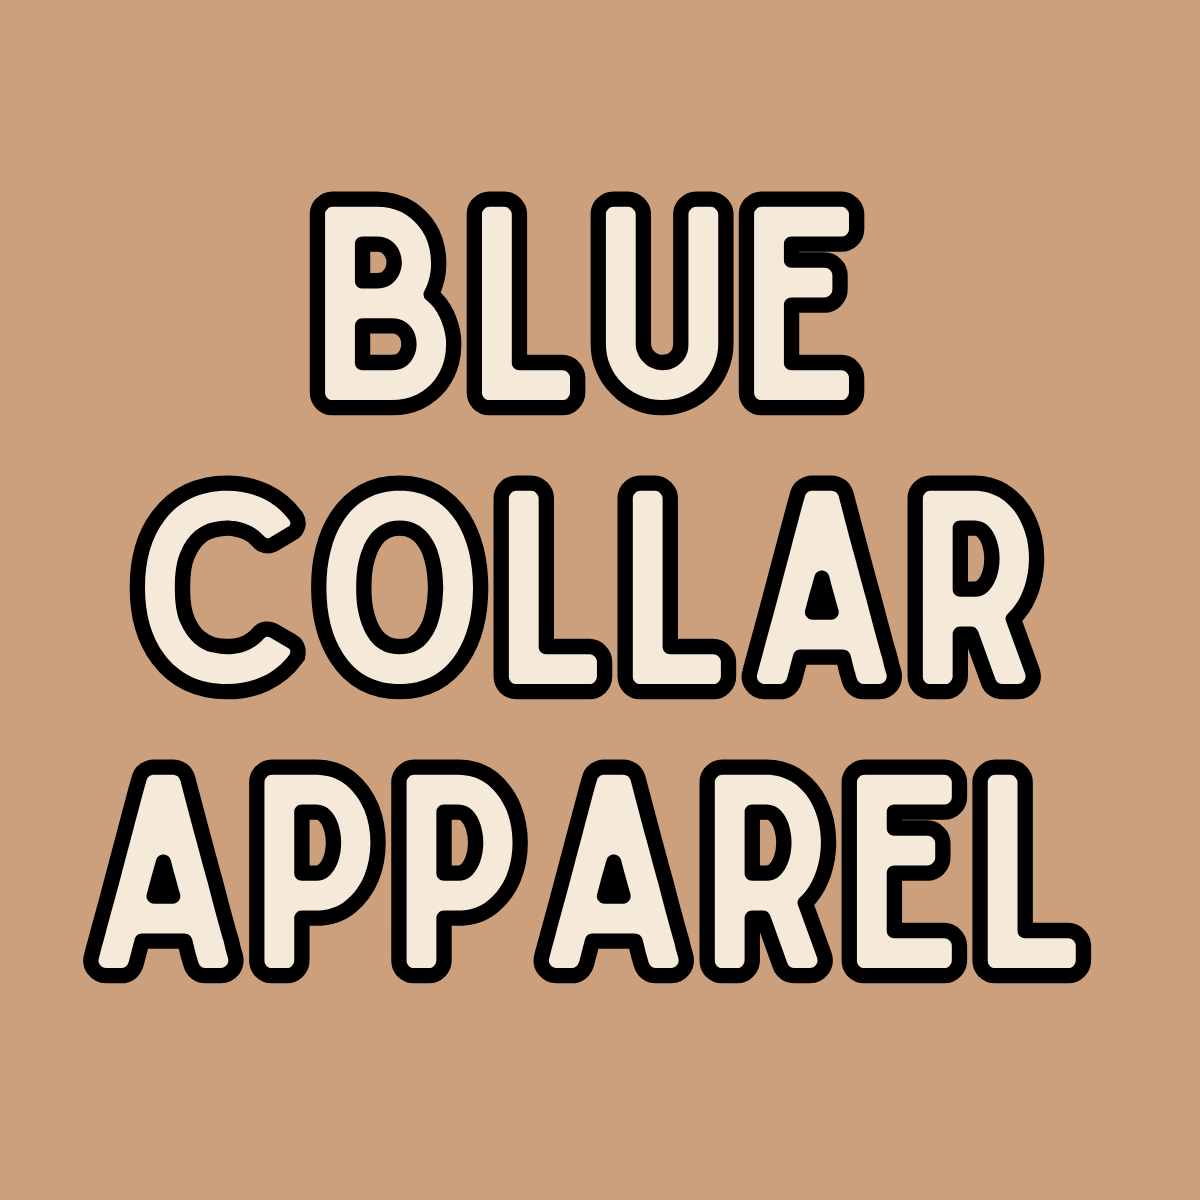 BLUE COLLAR APPAREL